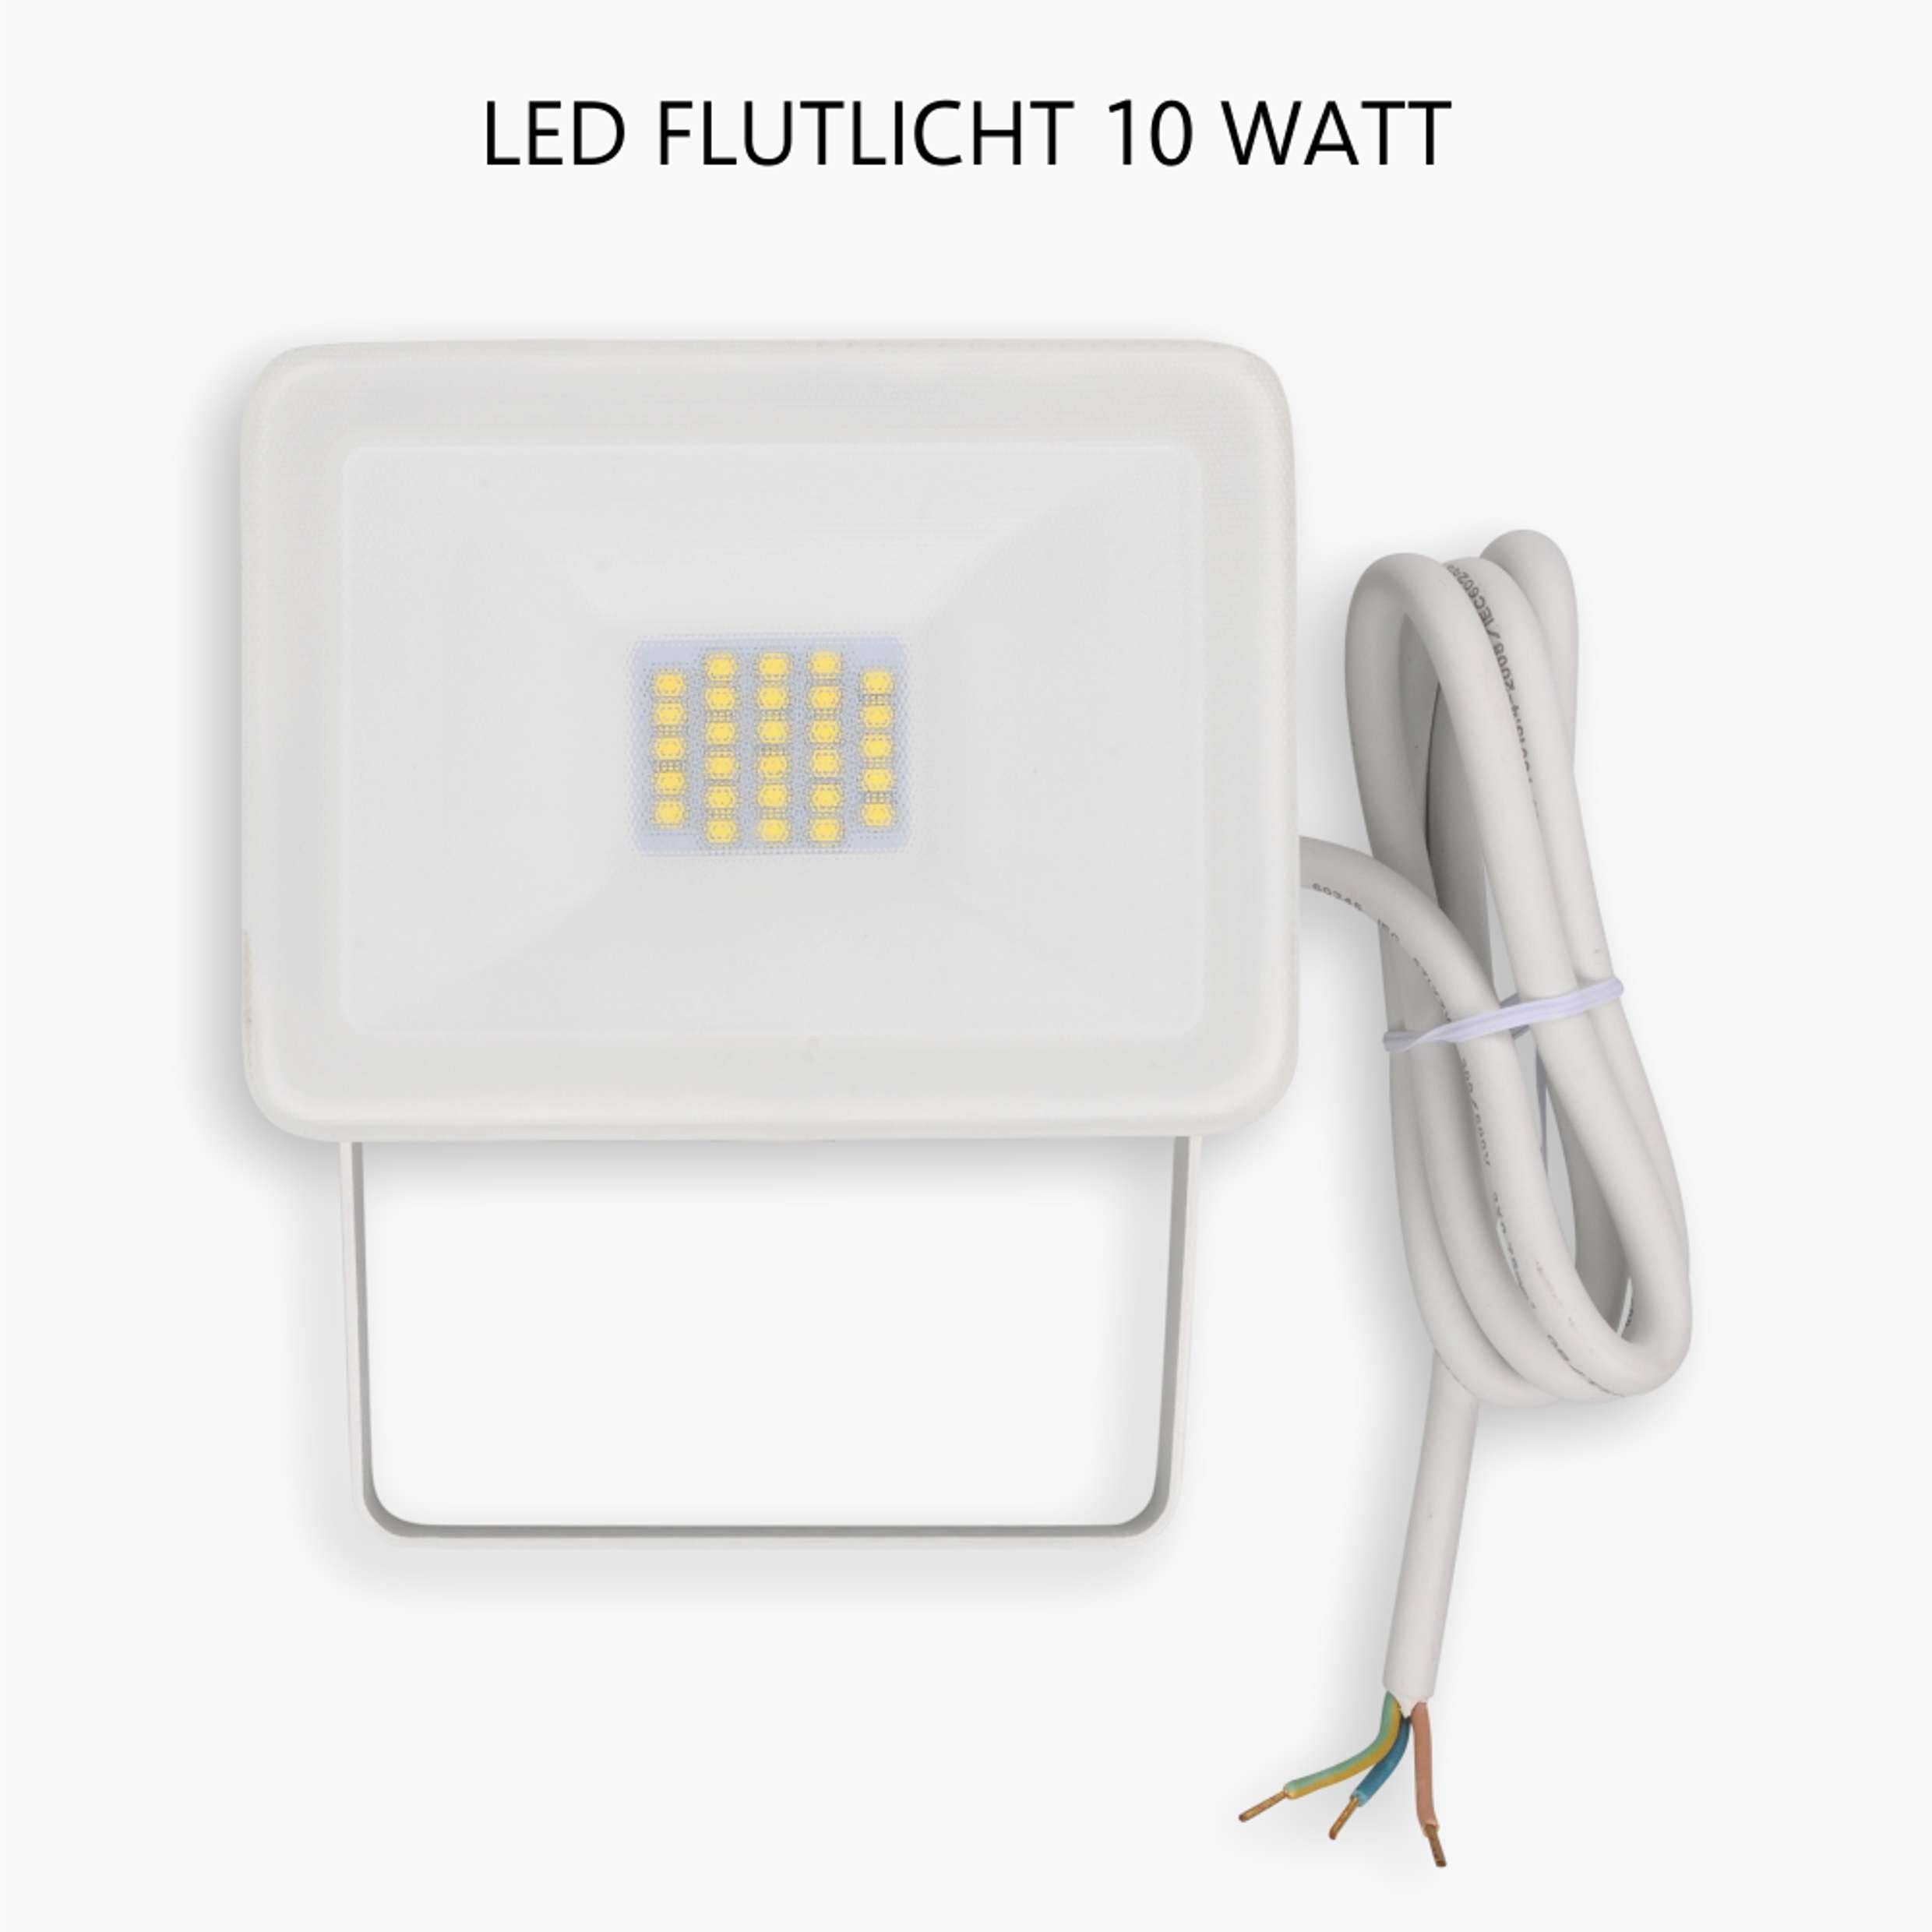 LED 90 integriert, Klasse der LF60, Frostbeständig, Wasserdicht LED-Strahler, cm Elro langes Sicherheitsglas fest LED I, Neutralweiß, Stromkabel, Wandstrahler